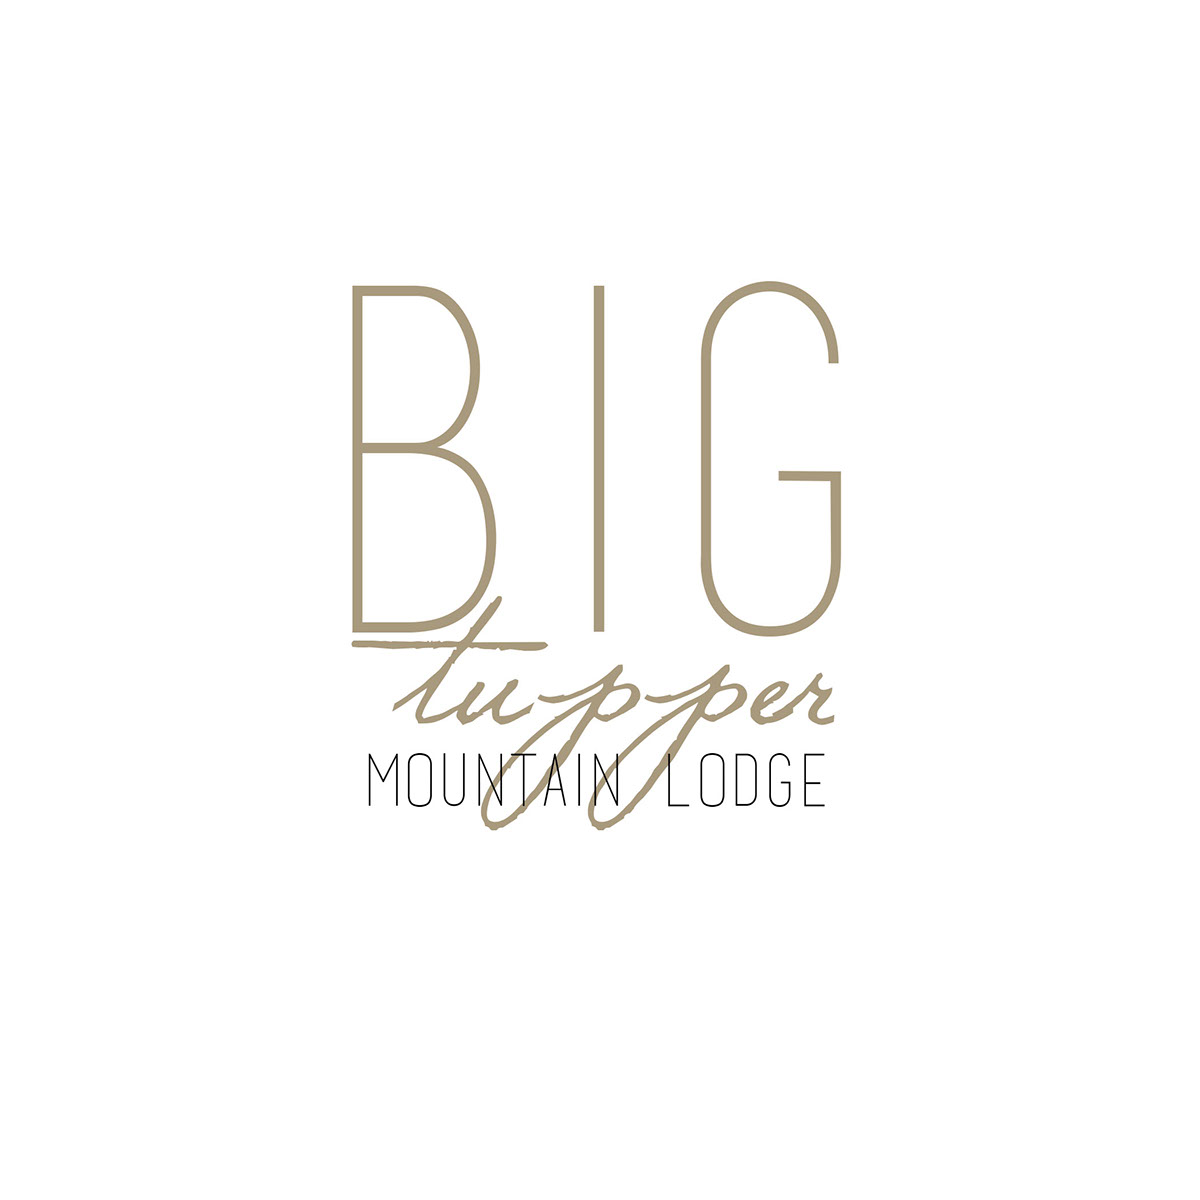 mountain lodge logo design